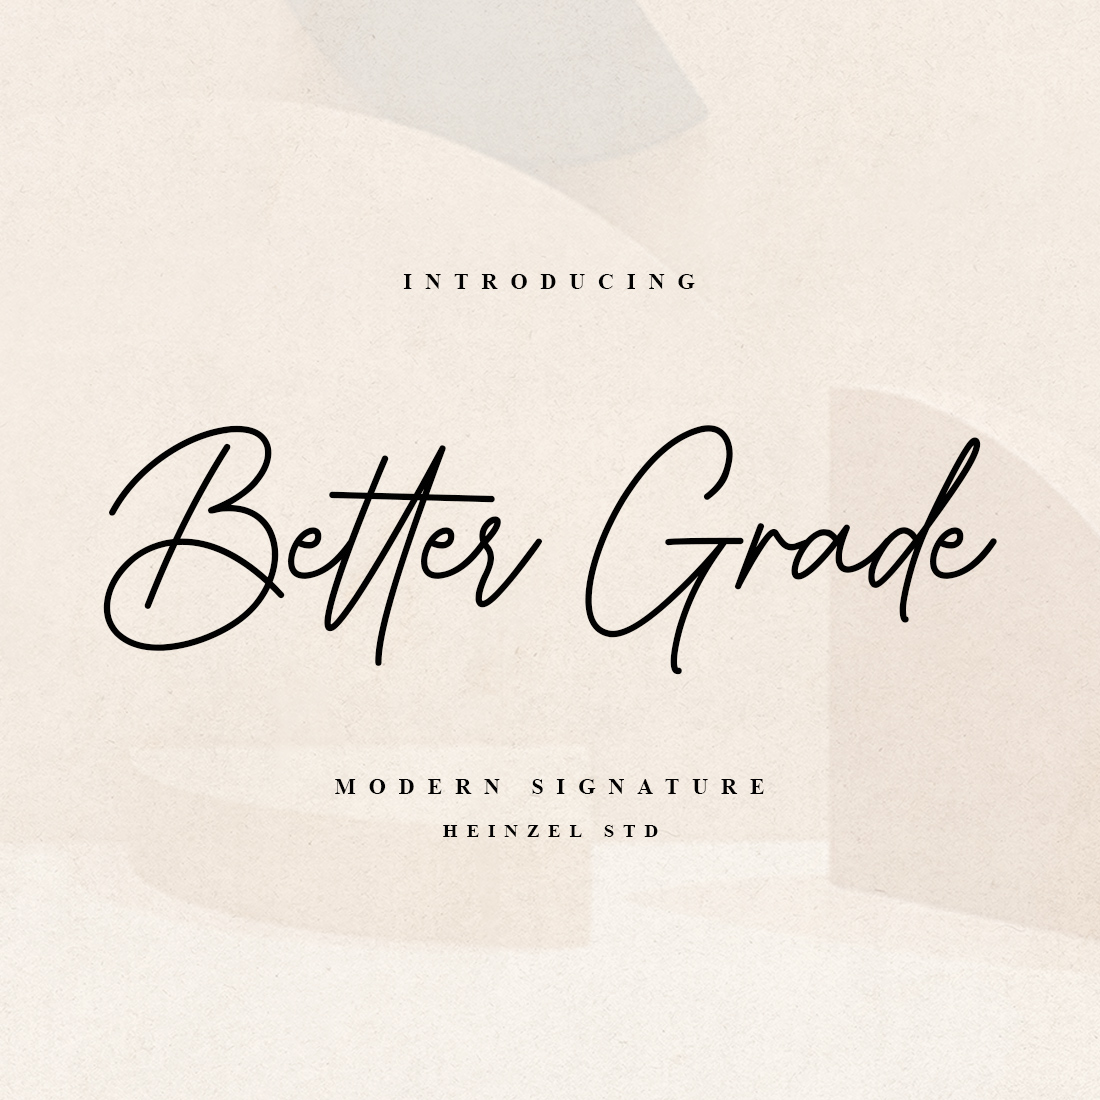 Better Grade - Modern Signature Font cover image.